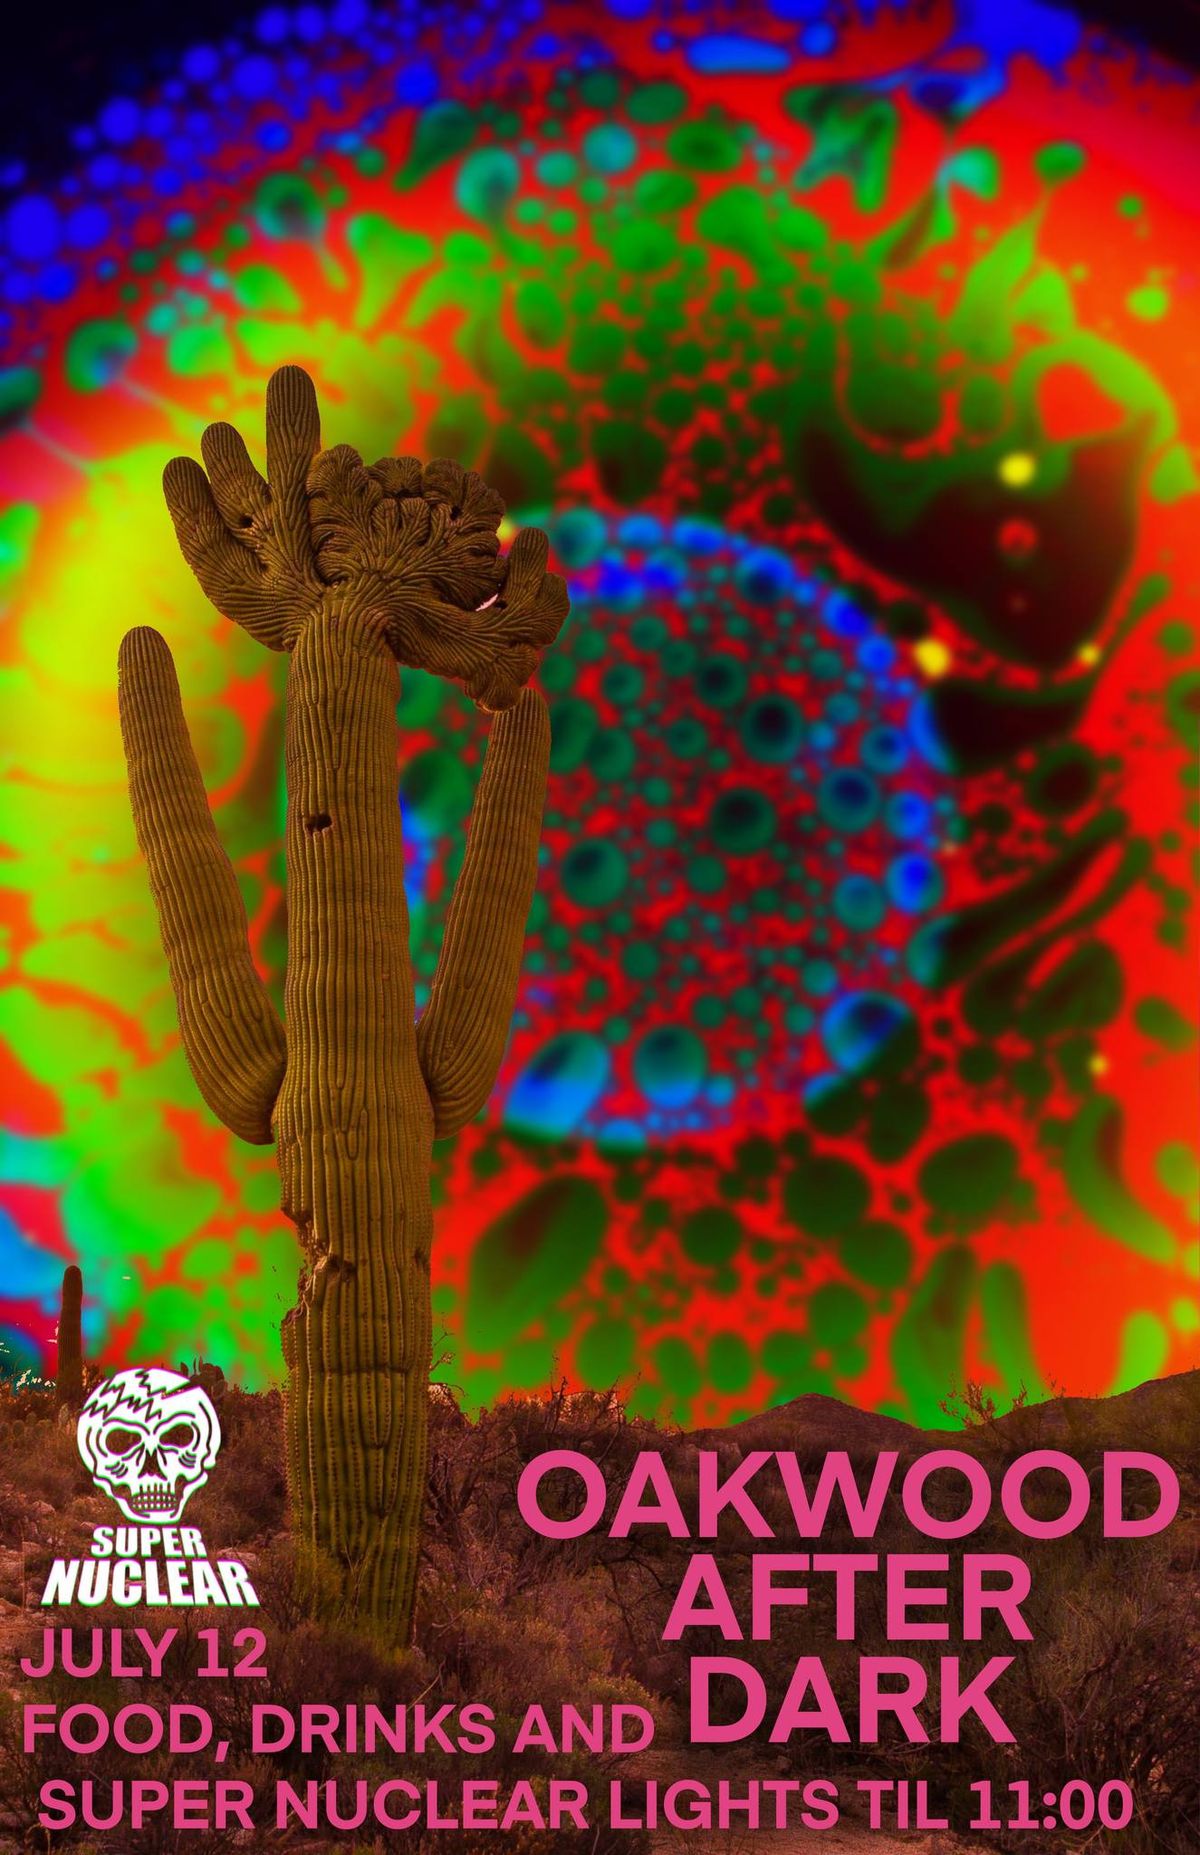 Oakwood After Dark fea. Super Nuclear